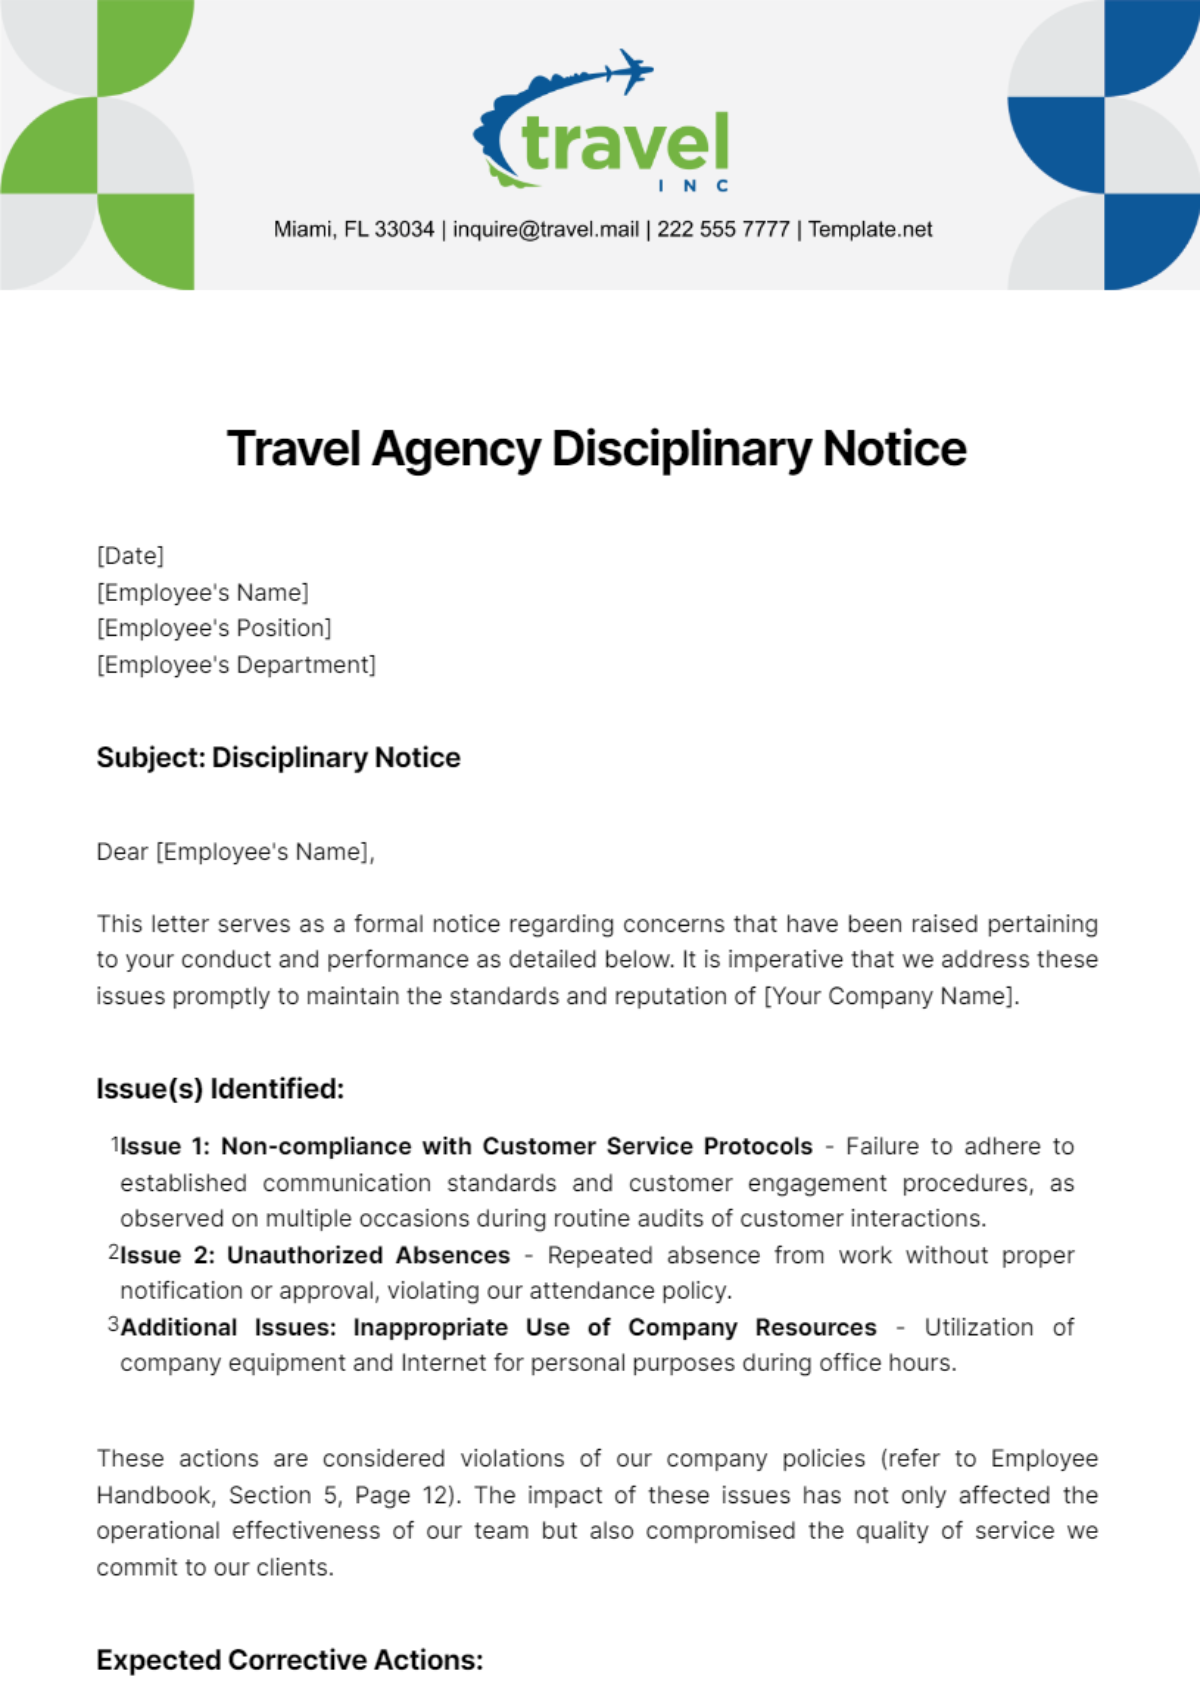 Travel Agency Disciplinary Notice Template